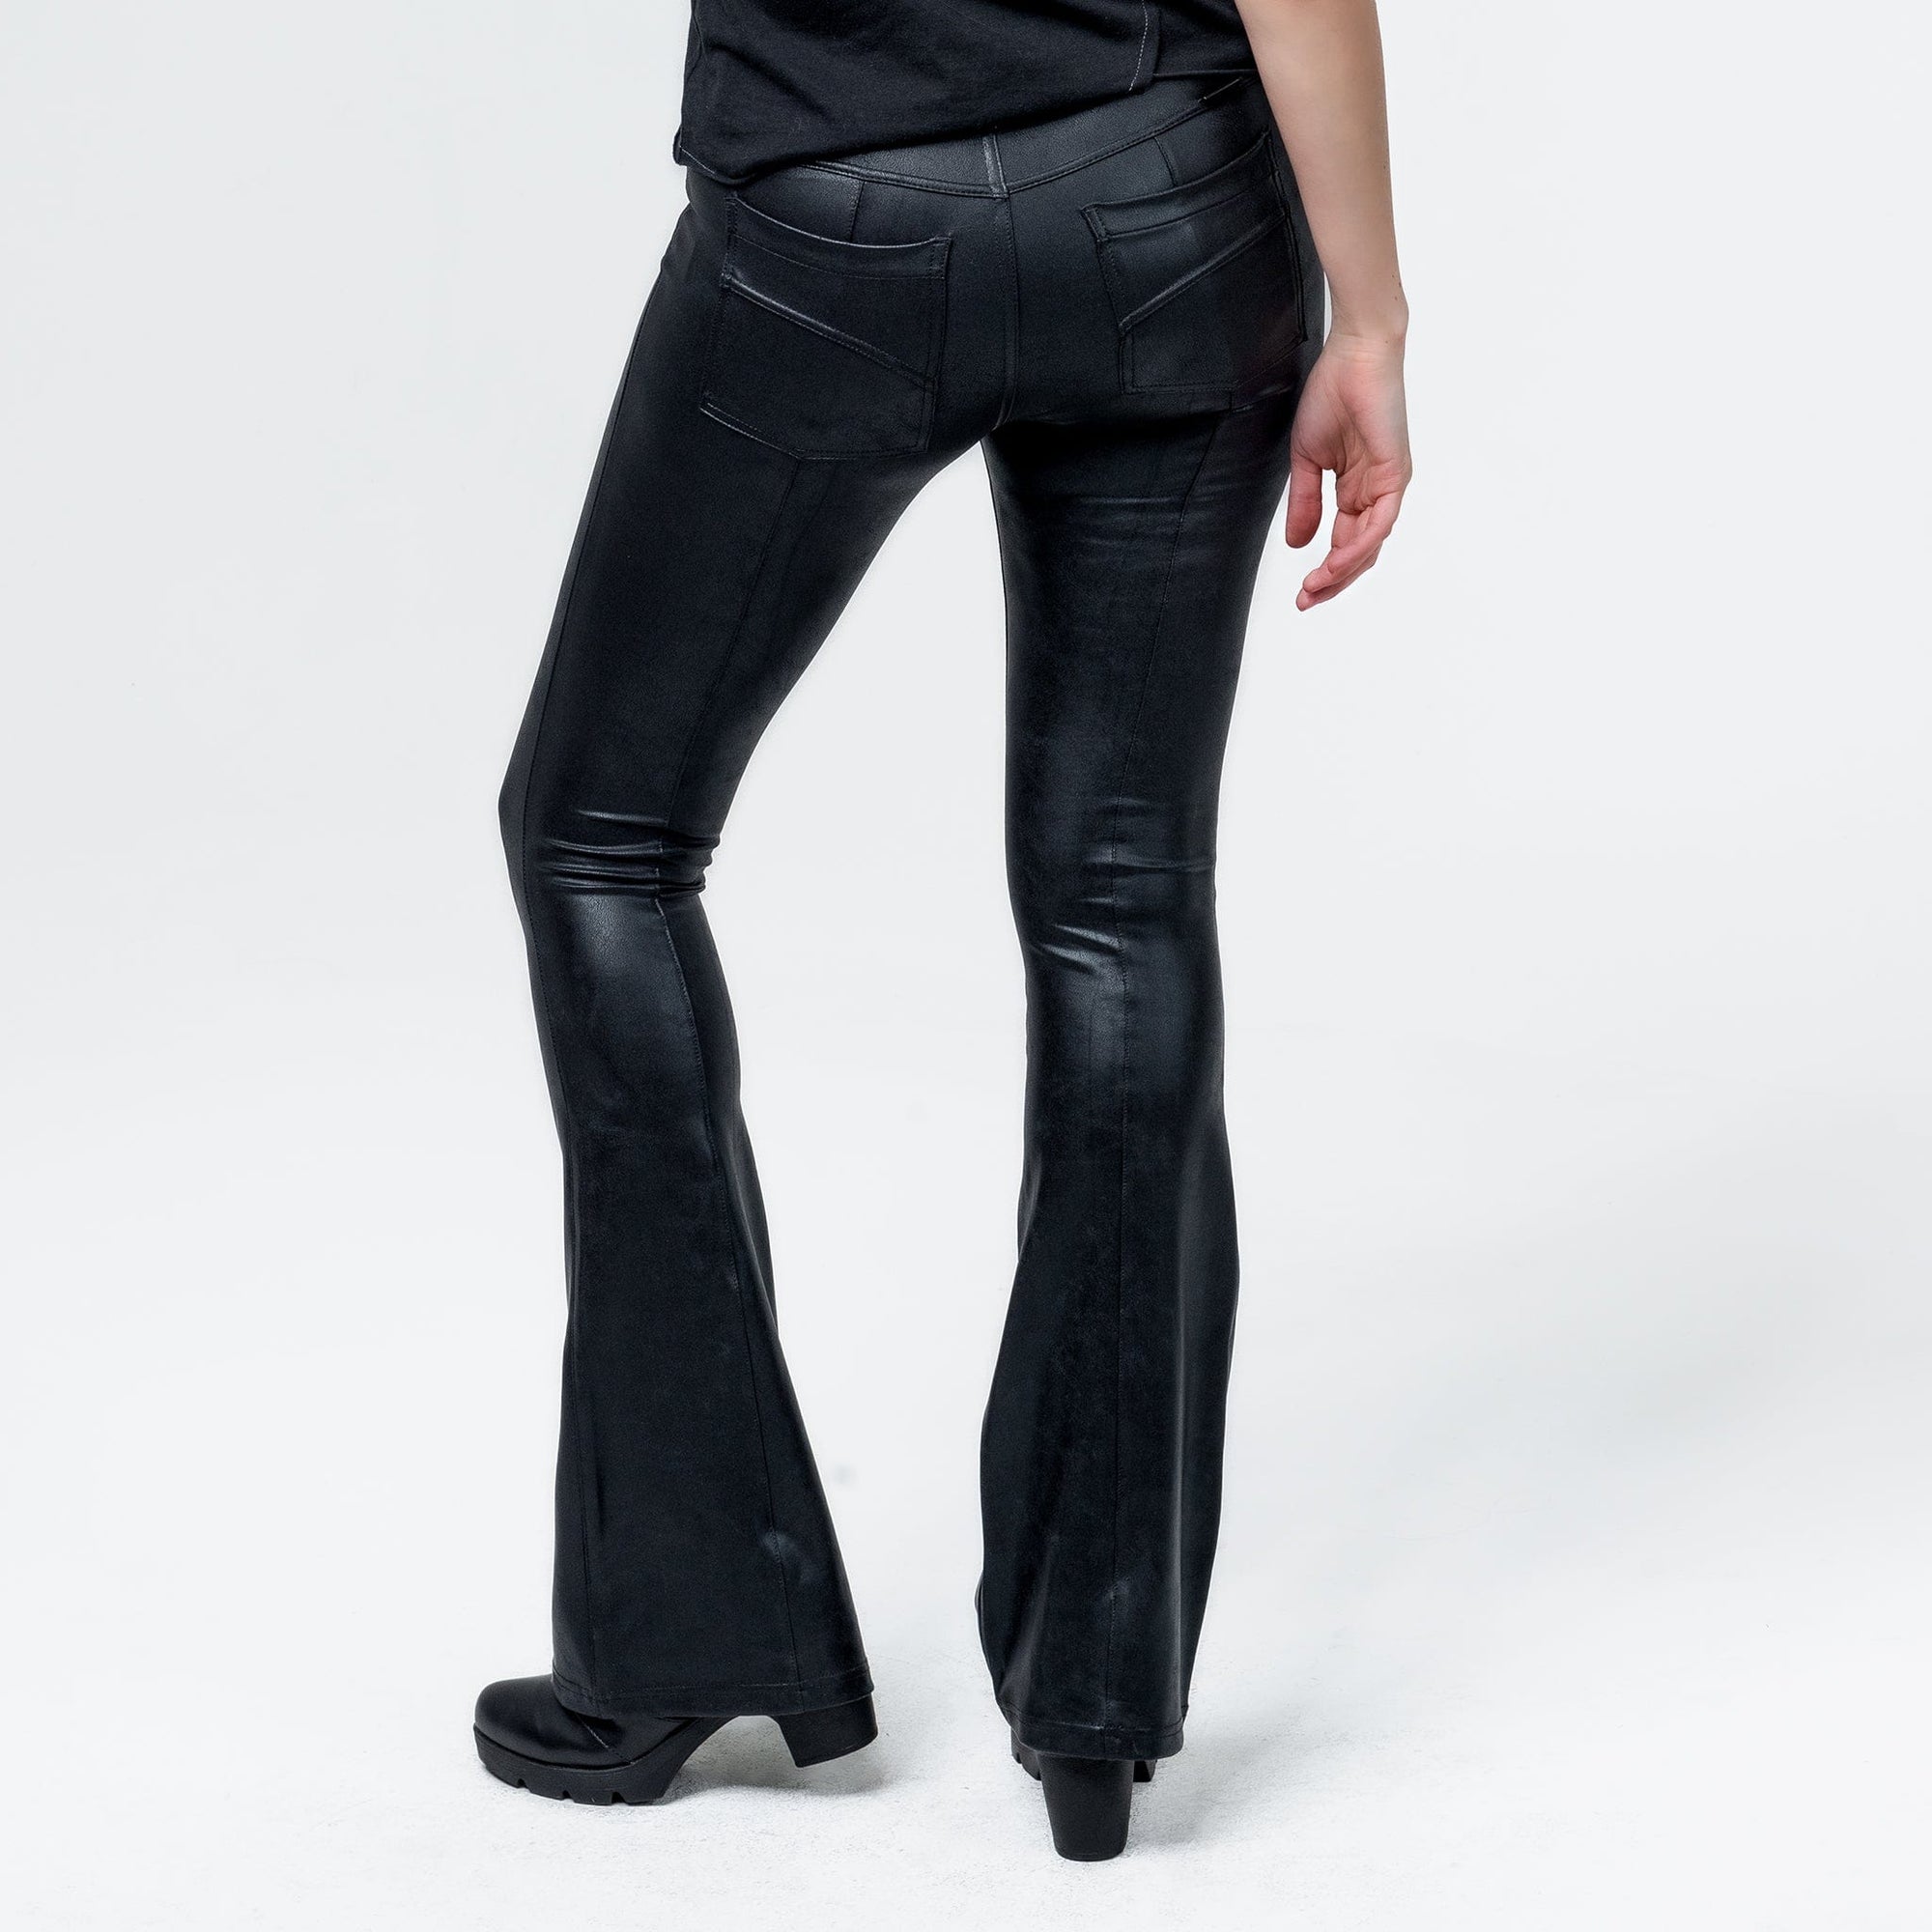 Wornstar Clothing Womens Leggings Fearless Bootcut Womens Pants - Black